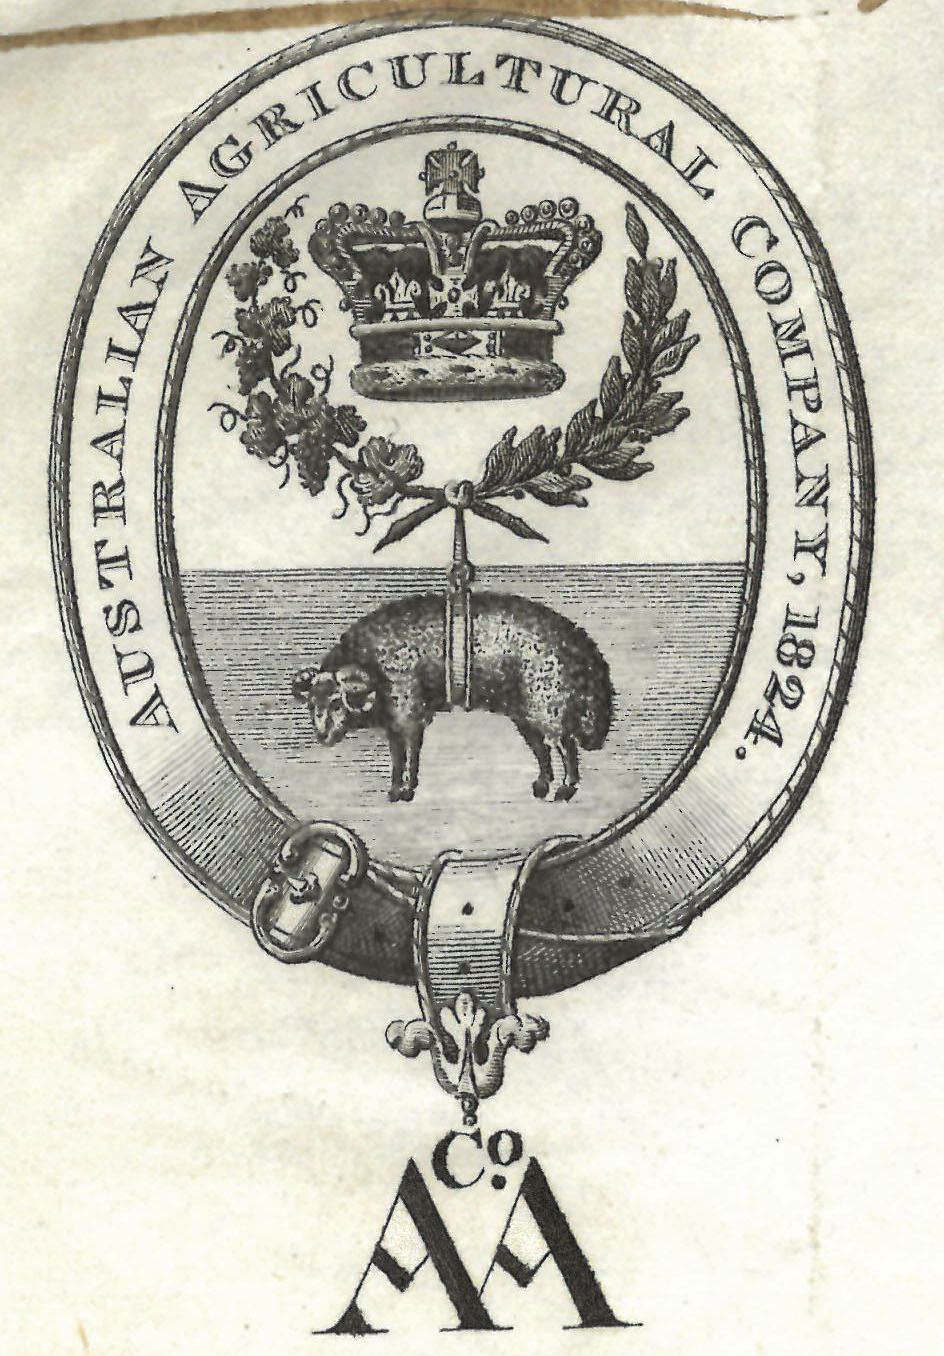 Original Australian Agricultural Company crest, 1824